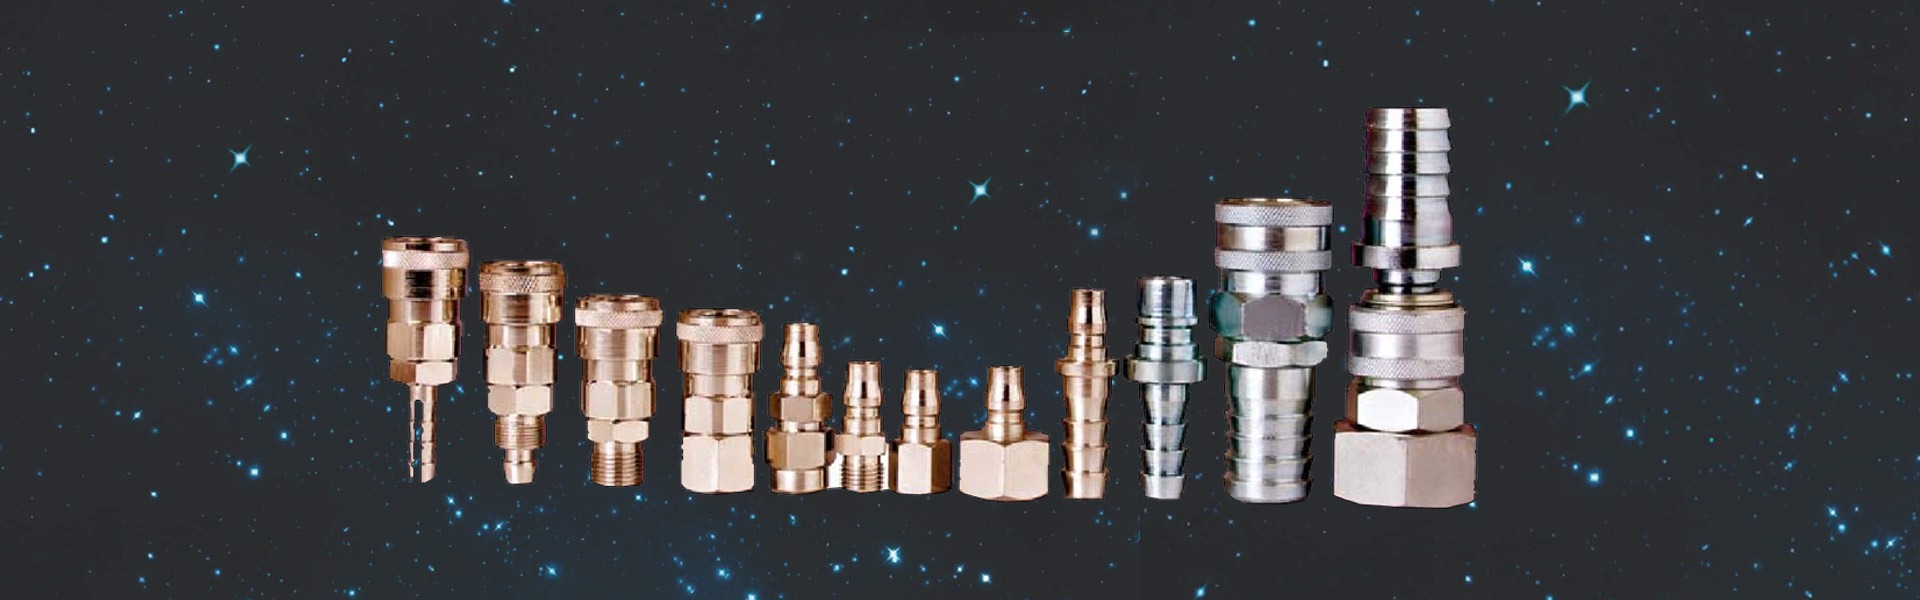 single check valve couplings